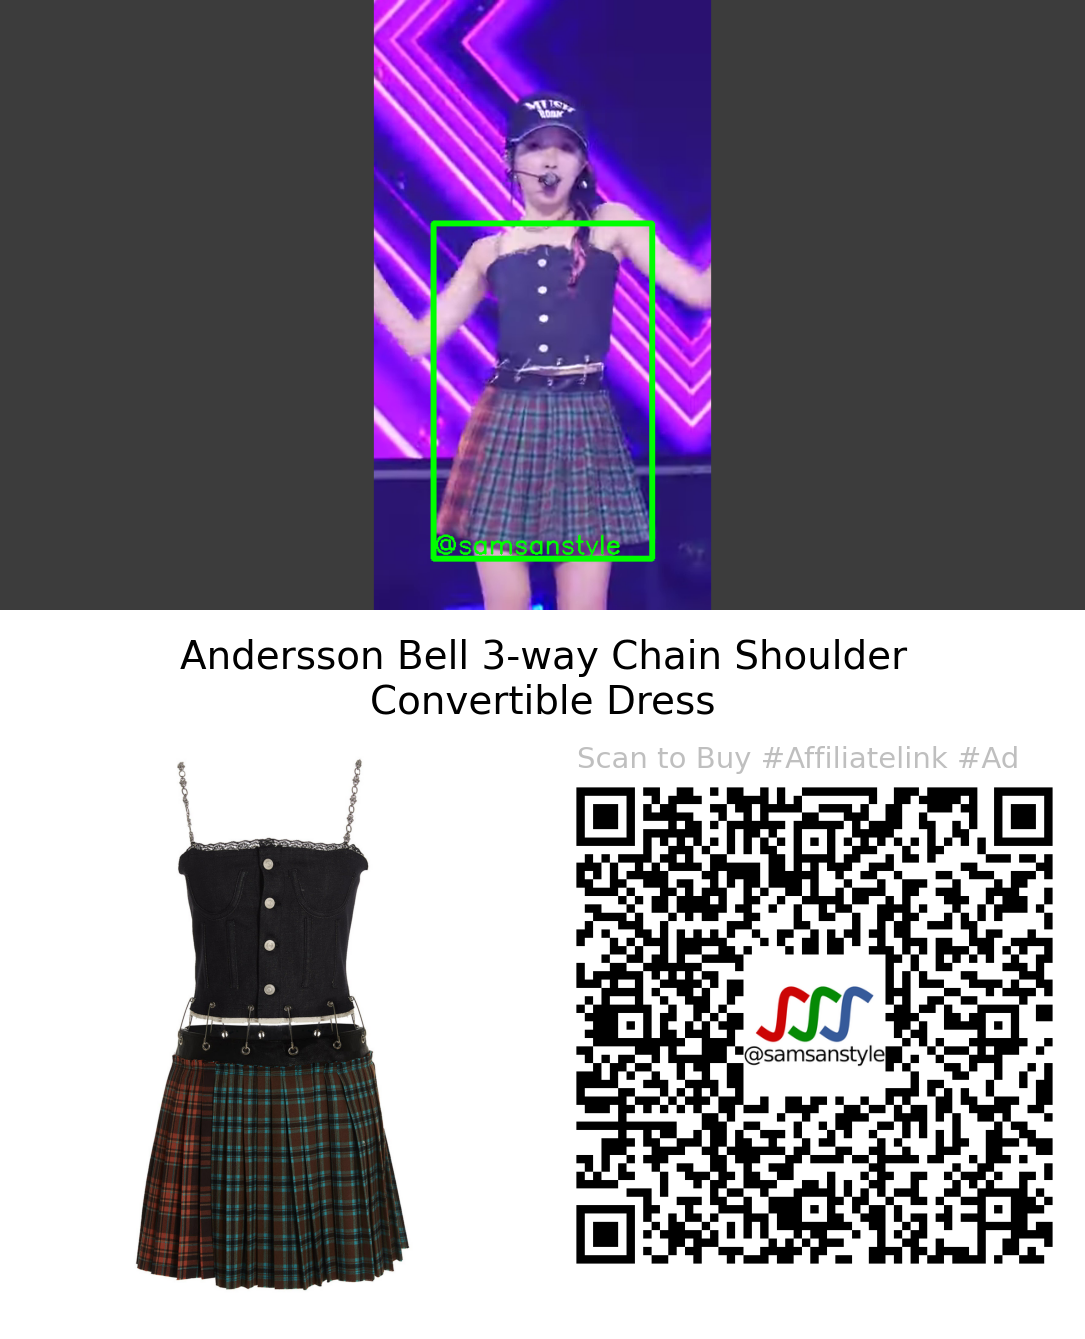 PRIMROSE Rainie | LAFFY TAFFY SBS Inkigayo | Andersson Bell 3-way Chain Shoulder Convertible Dress